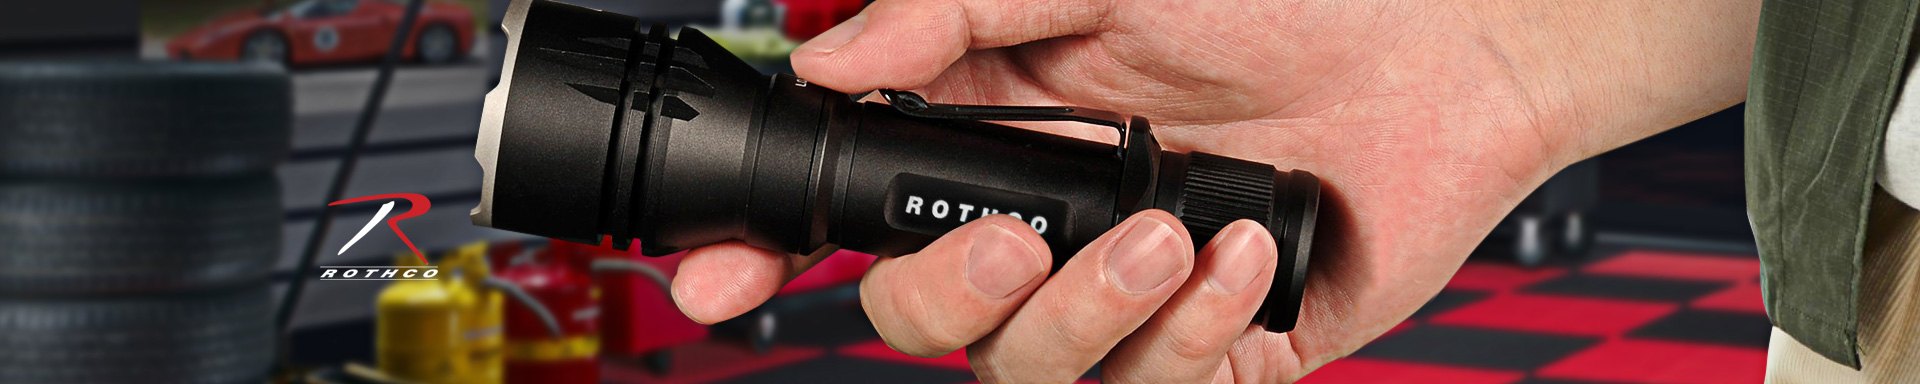 Rothco Multi Tools